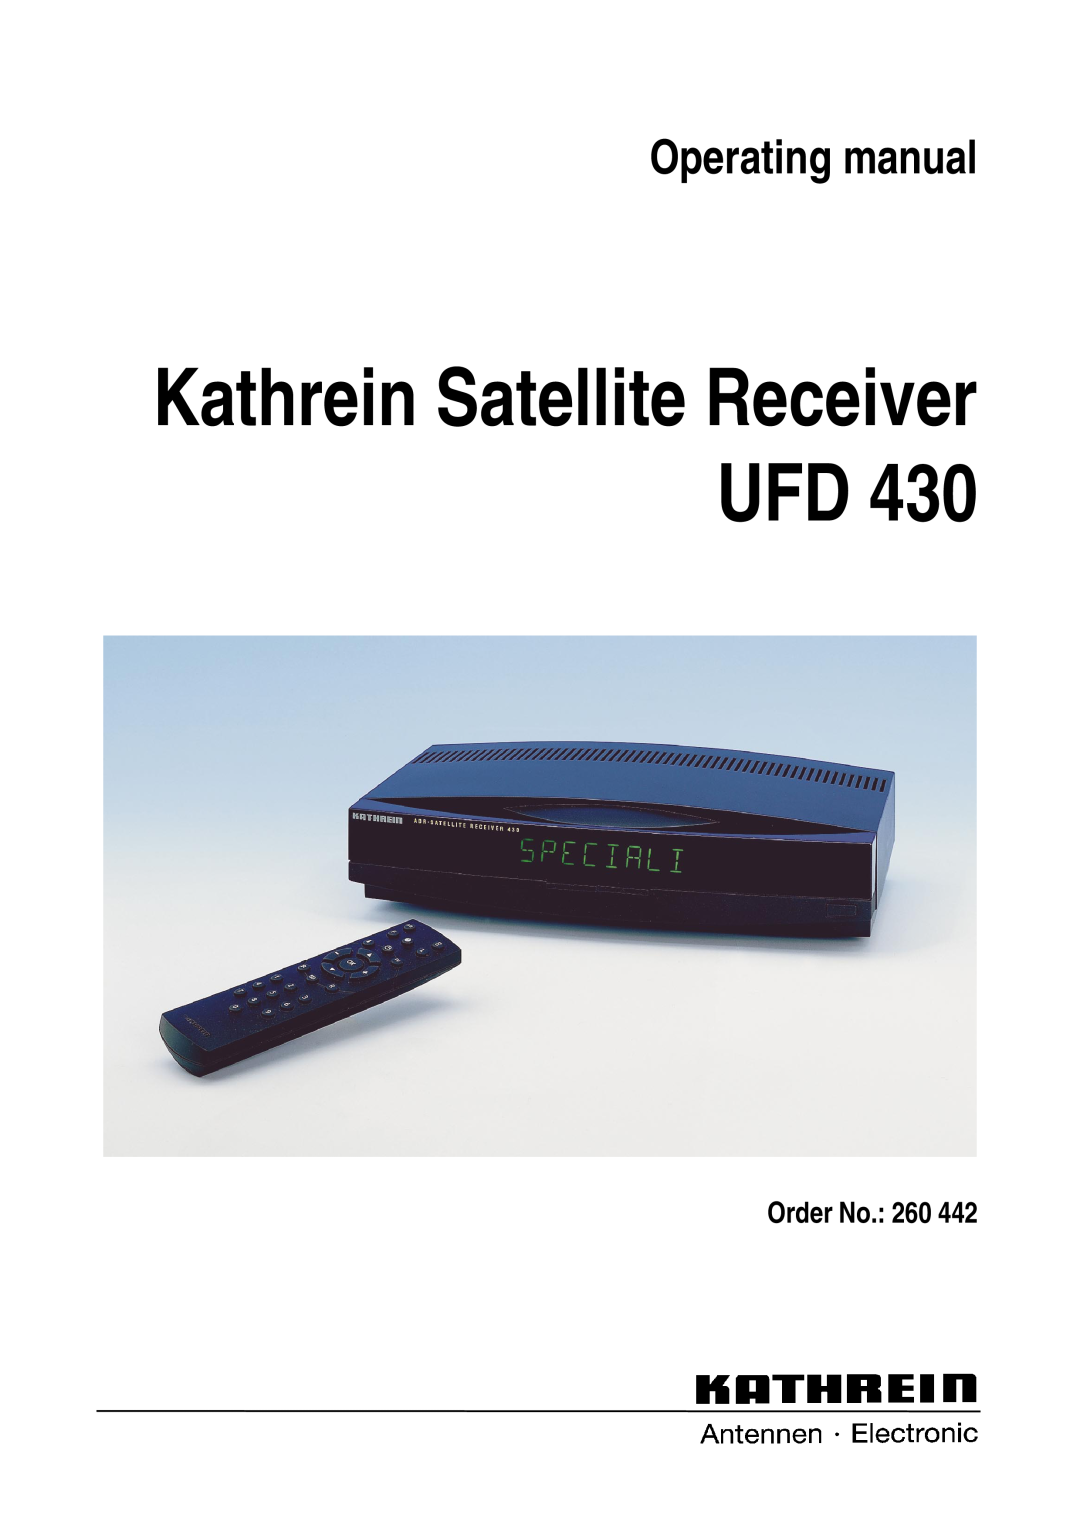 Kathrein UFD 430 manual Kathrein Satellite Receiver UFD, Operating manual, Order No. 260 